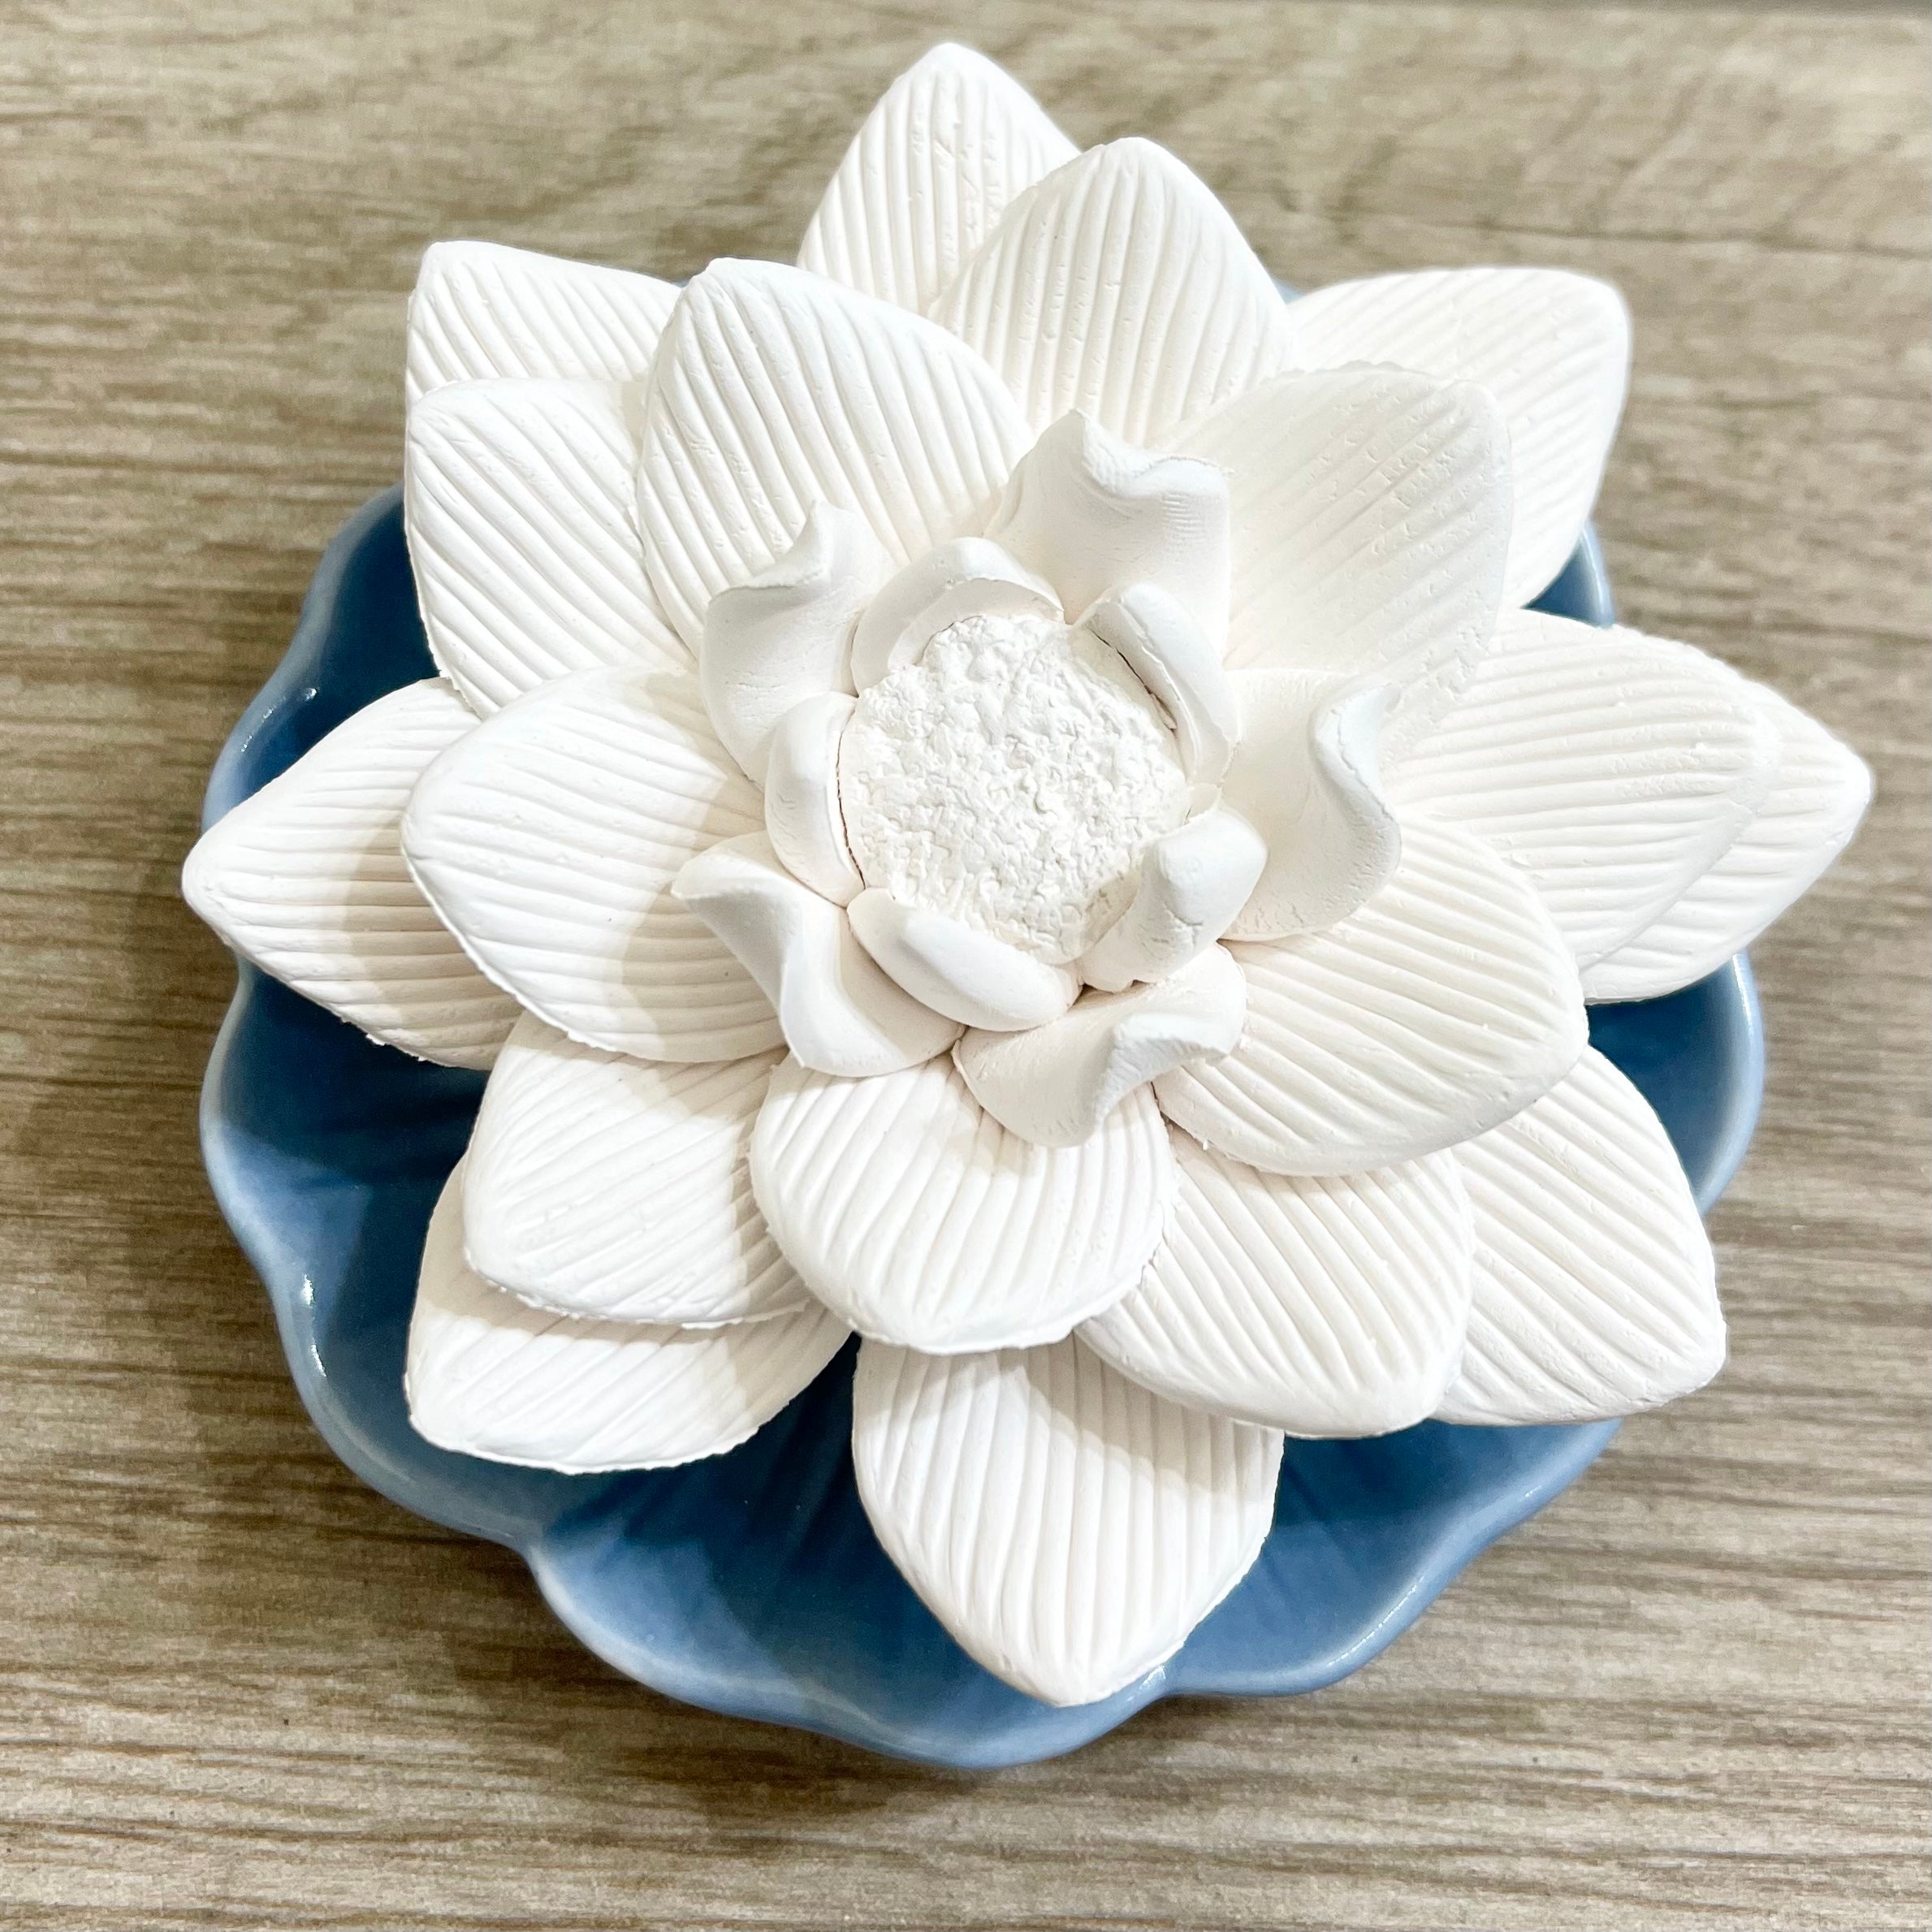 Ceramic Flower Diffuser - You Rock Dubai